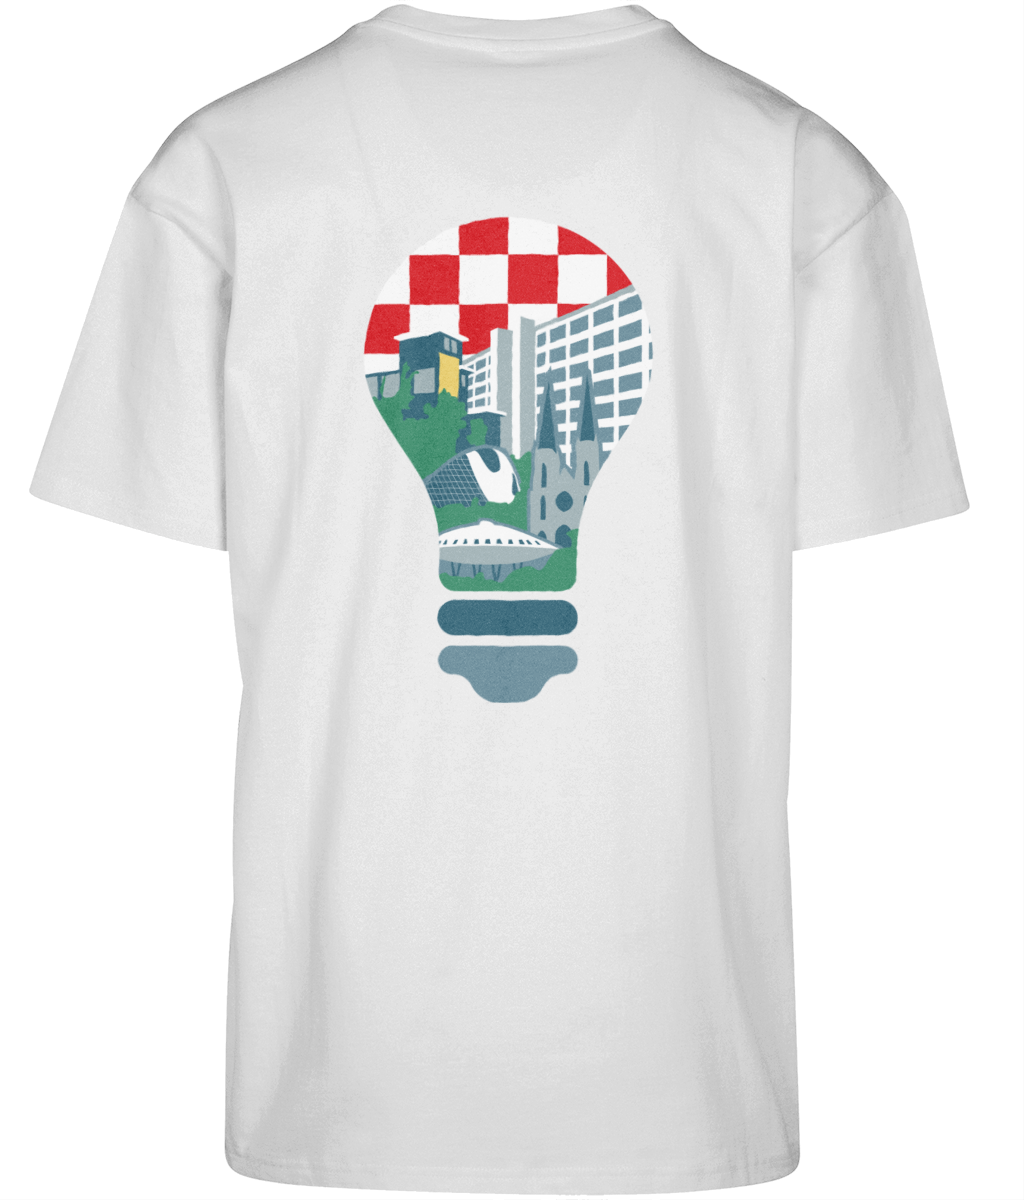 Rootz Eindhoven t-shirt